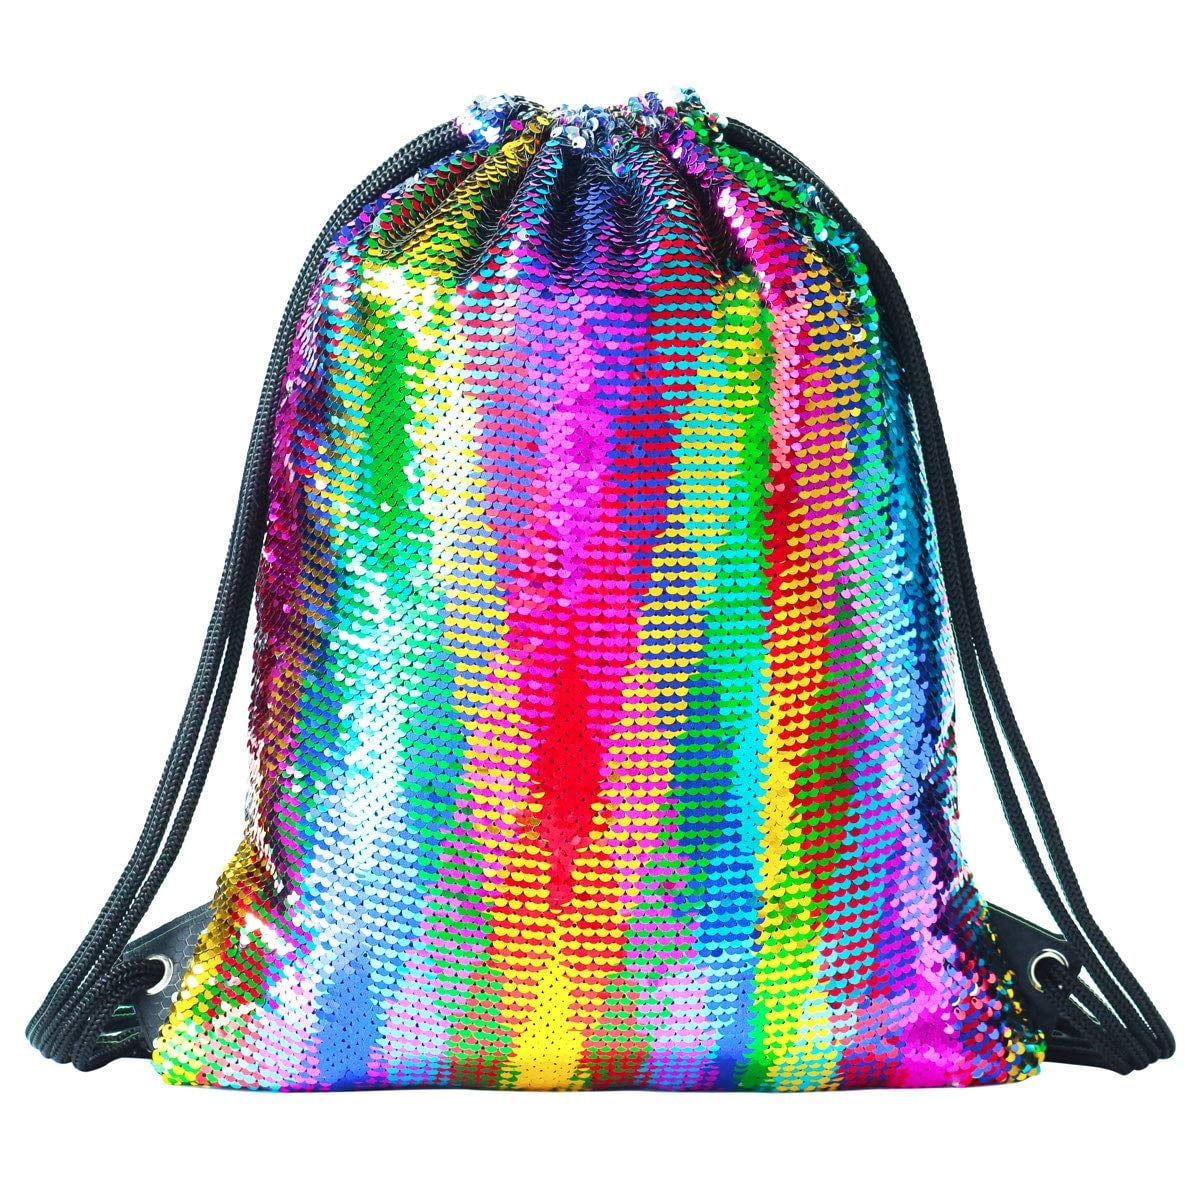 New F+F girls shiny rainbow glittery drawstring bag PE etc school bnwt 